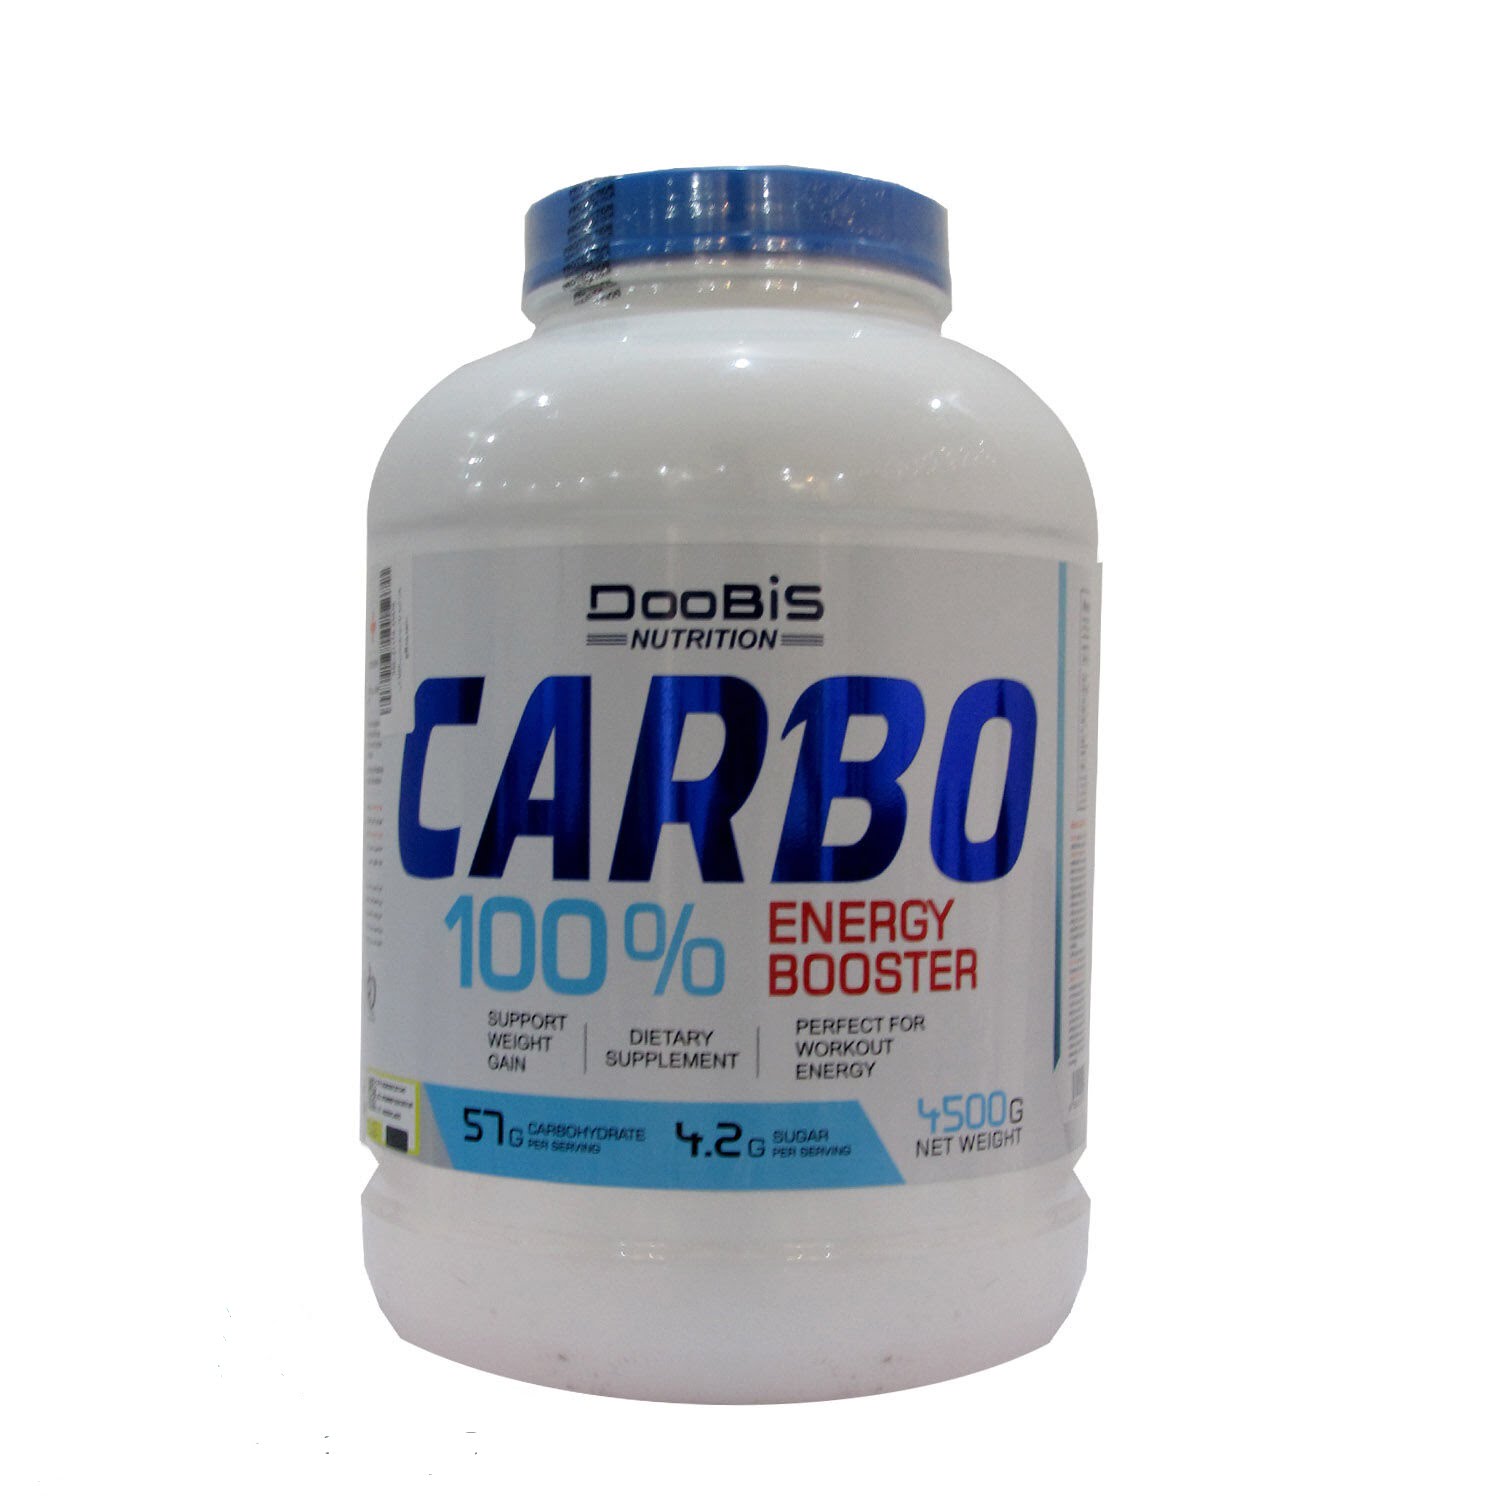 کربو 100 درصد انرژی بوستر دوبیس  4500 گرمی DooBis Carbo 100% Energy Booster 4500 g